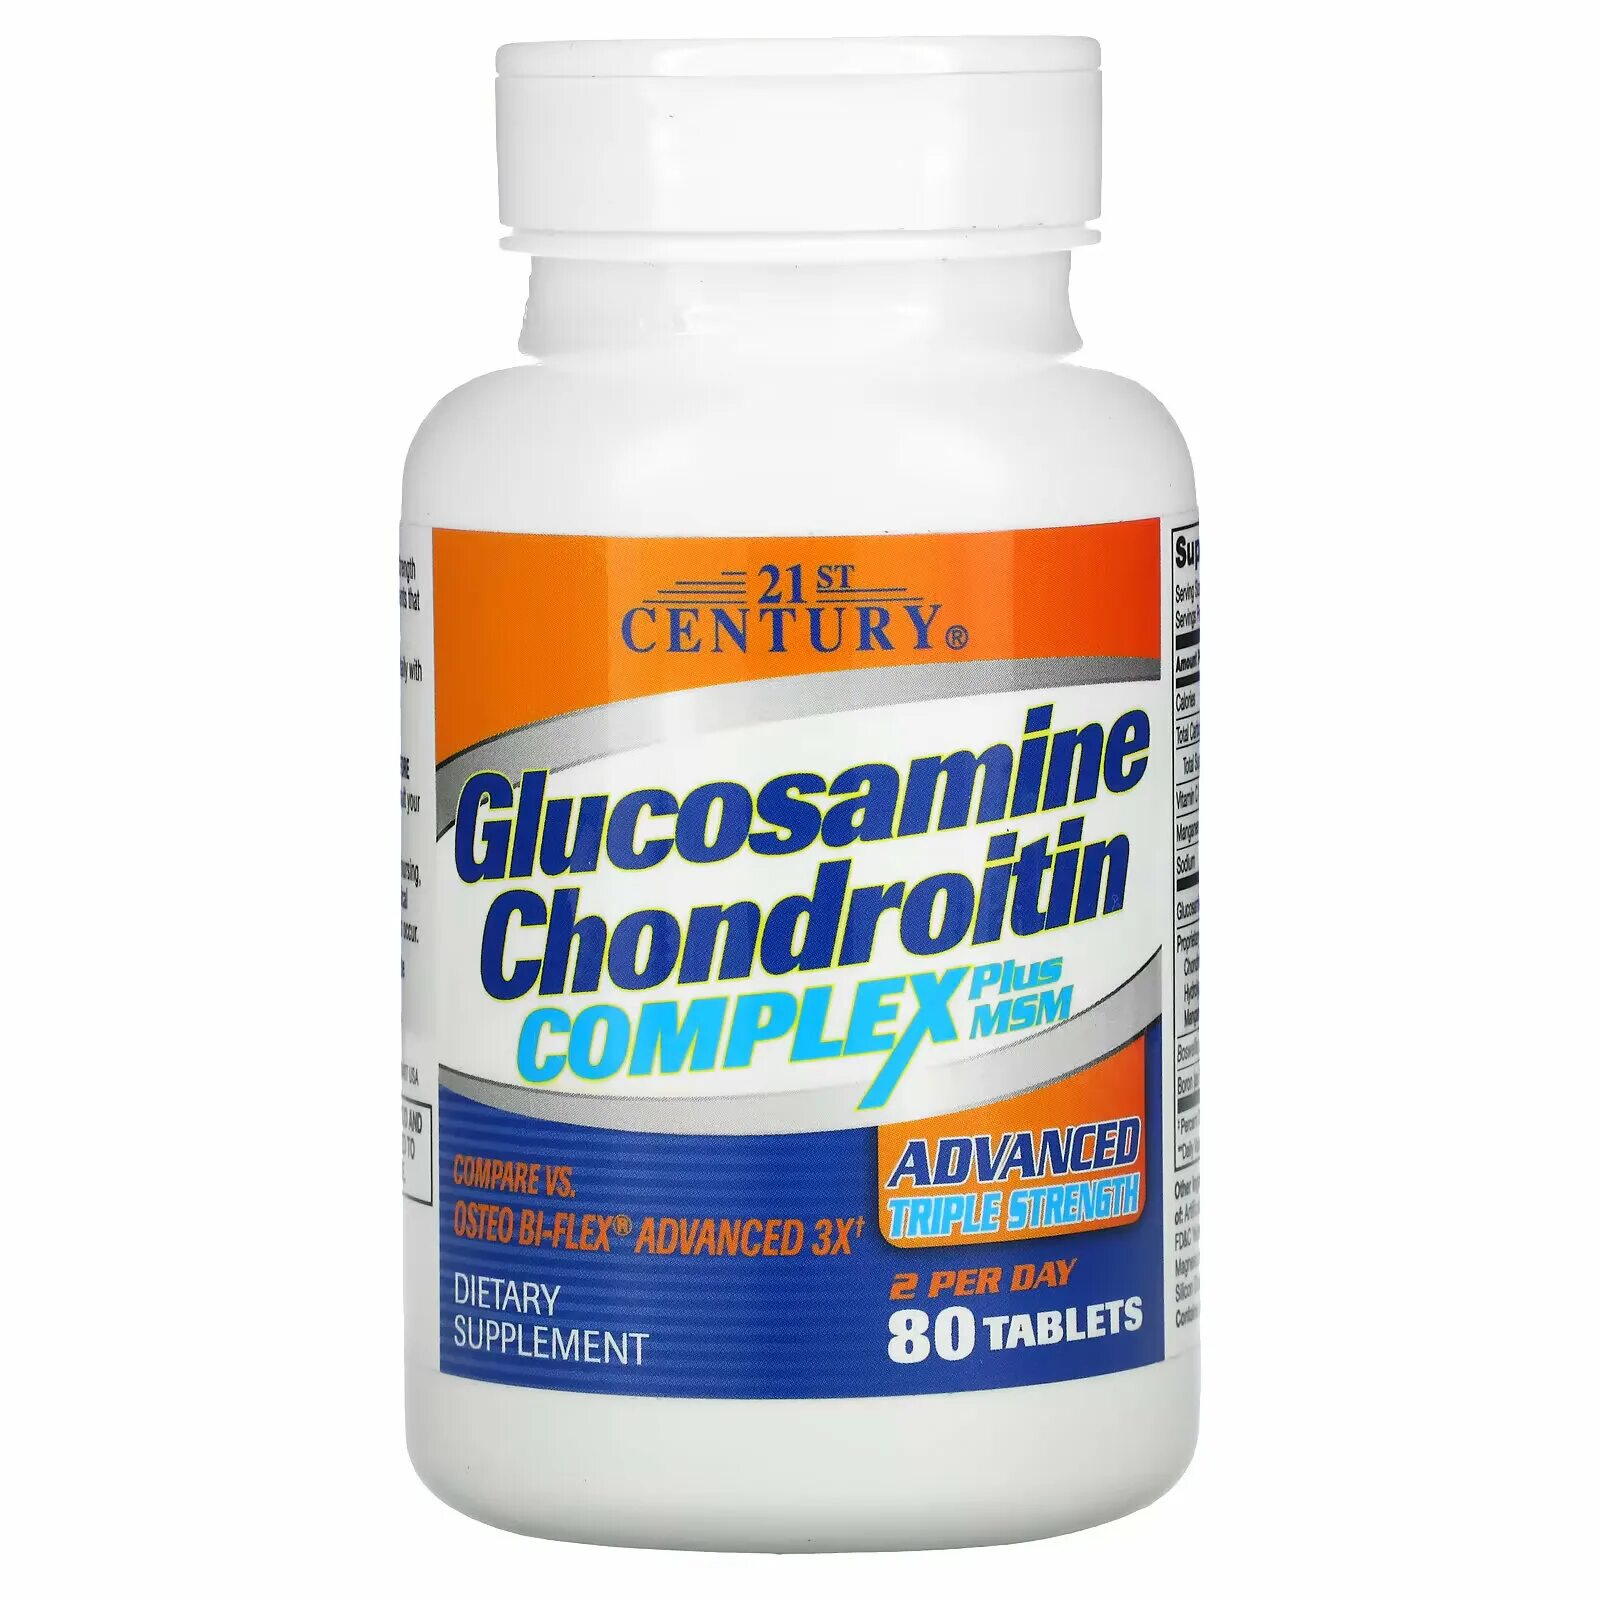 21st Century Glucosamine Chondroitin Complex Plus MSM. 21 Century глюкозамин хондроитин. Glucosamine Chondroitin Complex Plus MSM. Century Glucosamine Chondroitin Advanced.